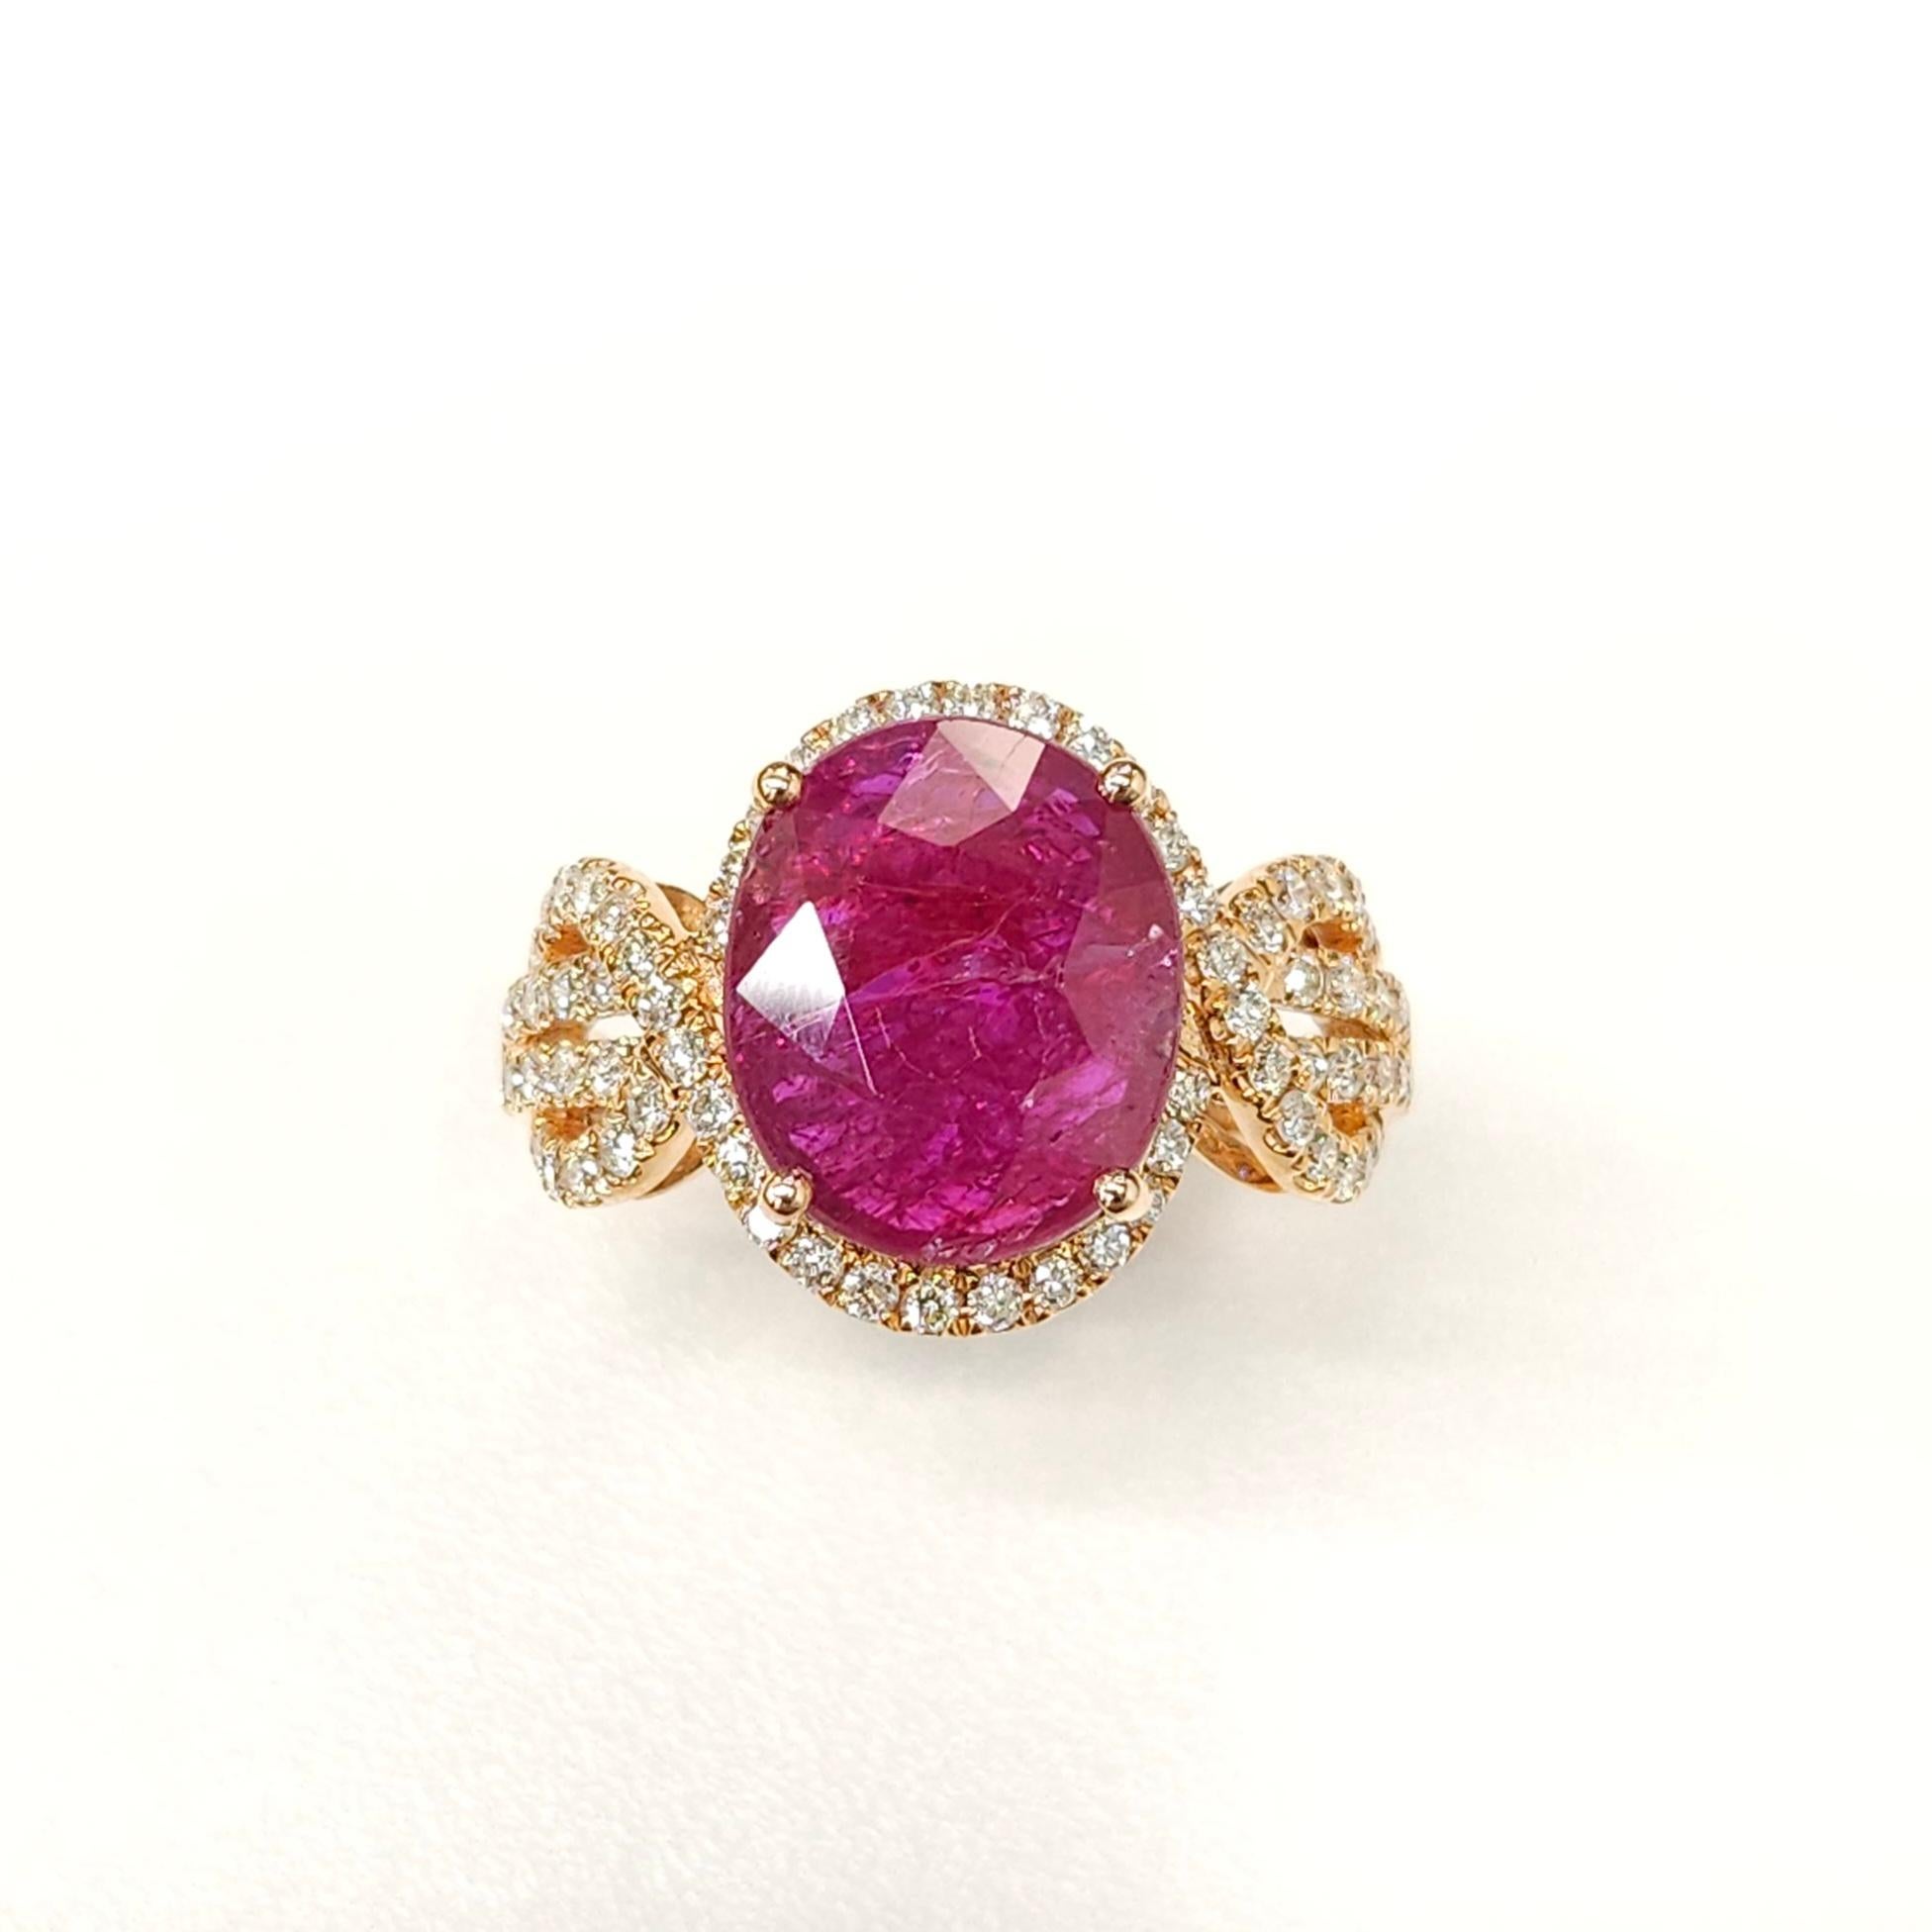 Oval Cut IGI Certified 4.02 Carat Ruby & Diamond Ring in 18K Rose Gold For Sale